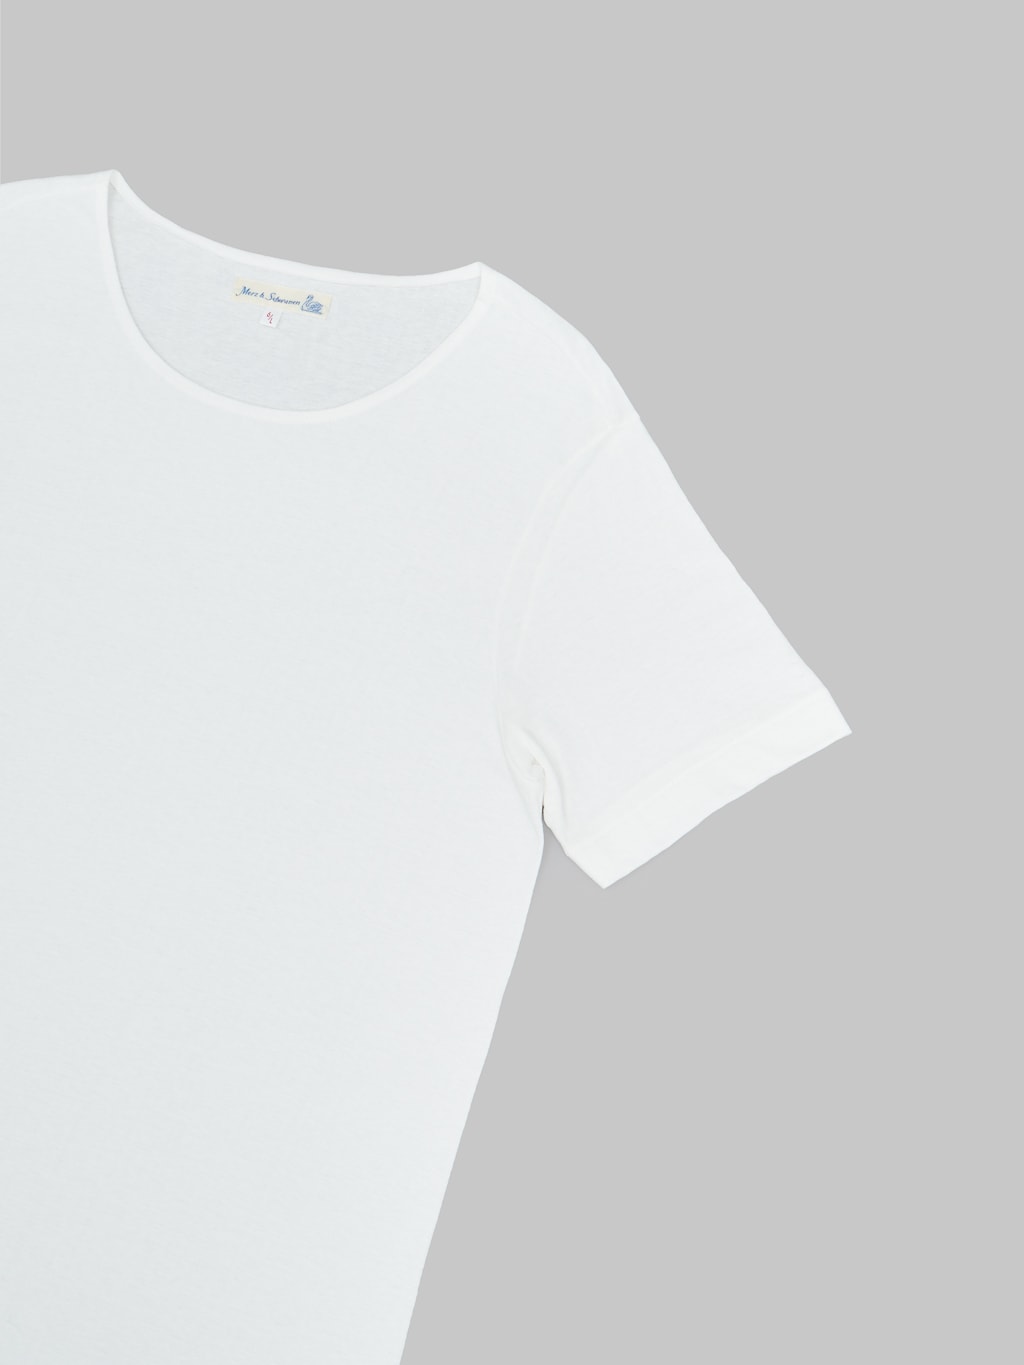 Merz b Schwanen 114 Loopwheeled TShirt white classic sleeve